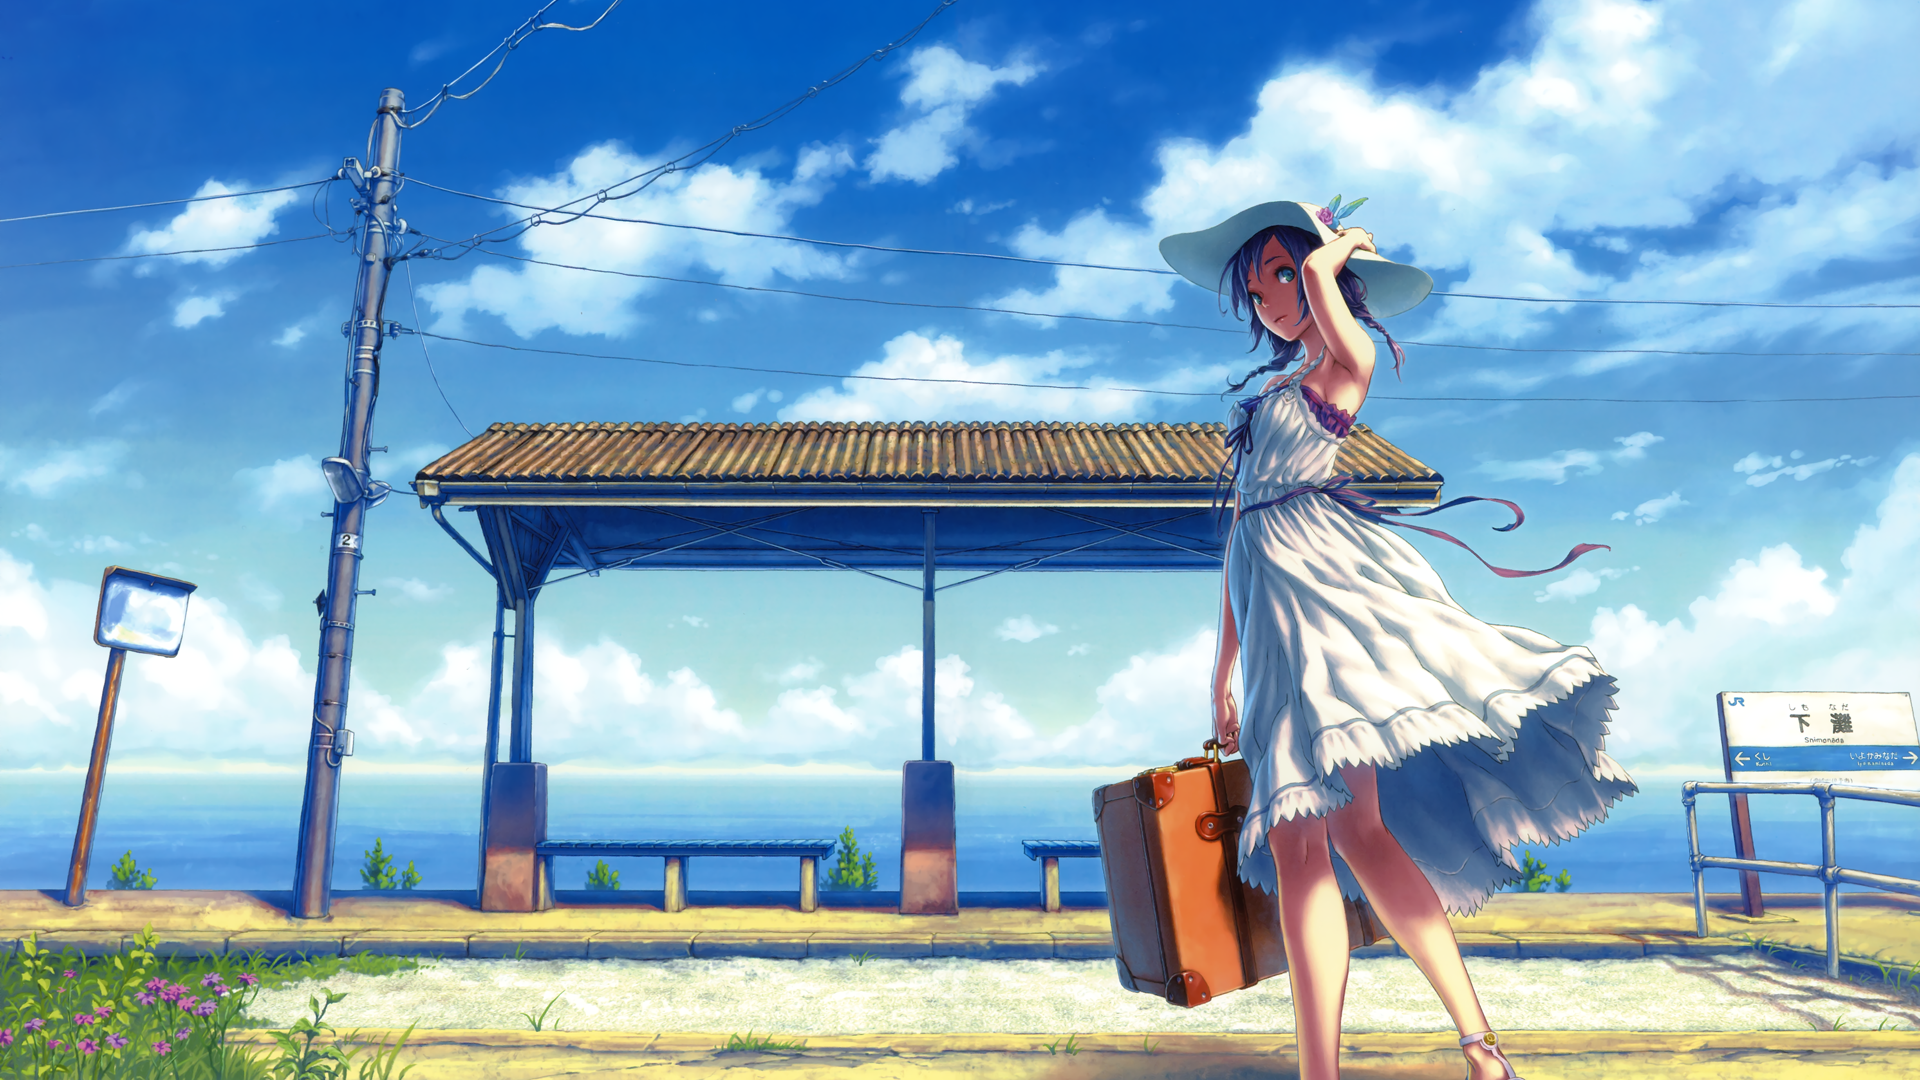 Anime 1920x1080 anime girls anime sea sky dress windy suitcase utility pole original characters hat white dress clouds outdoors sun dress artwork Hisakata Souji women with hats